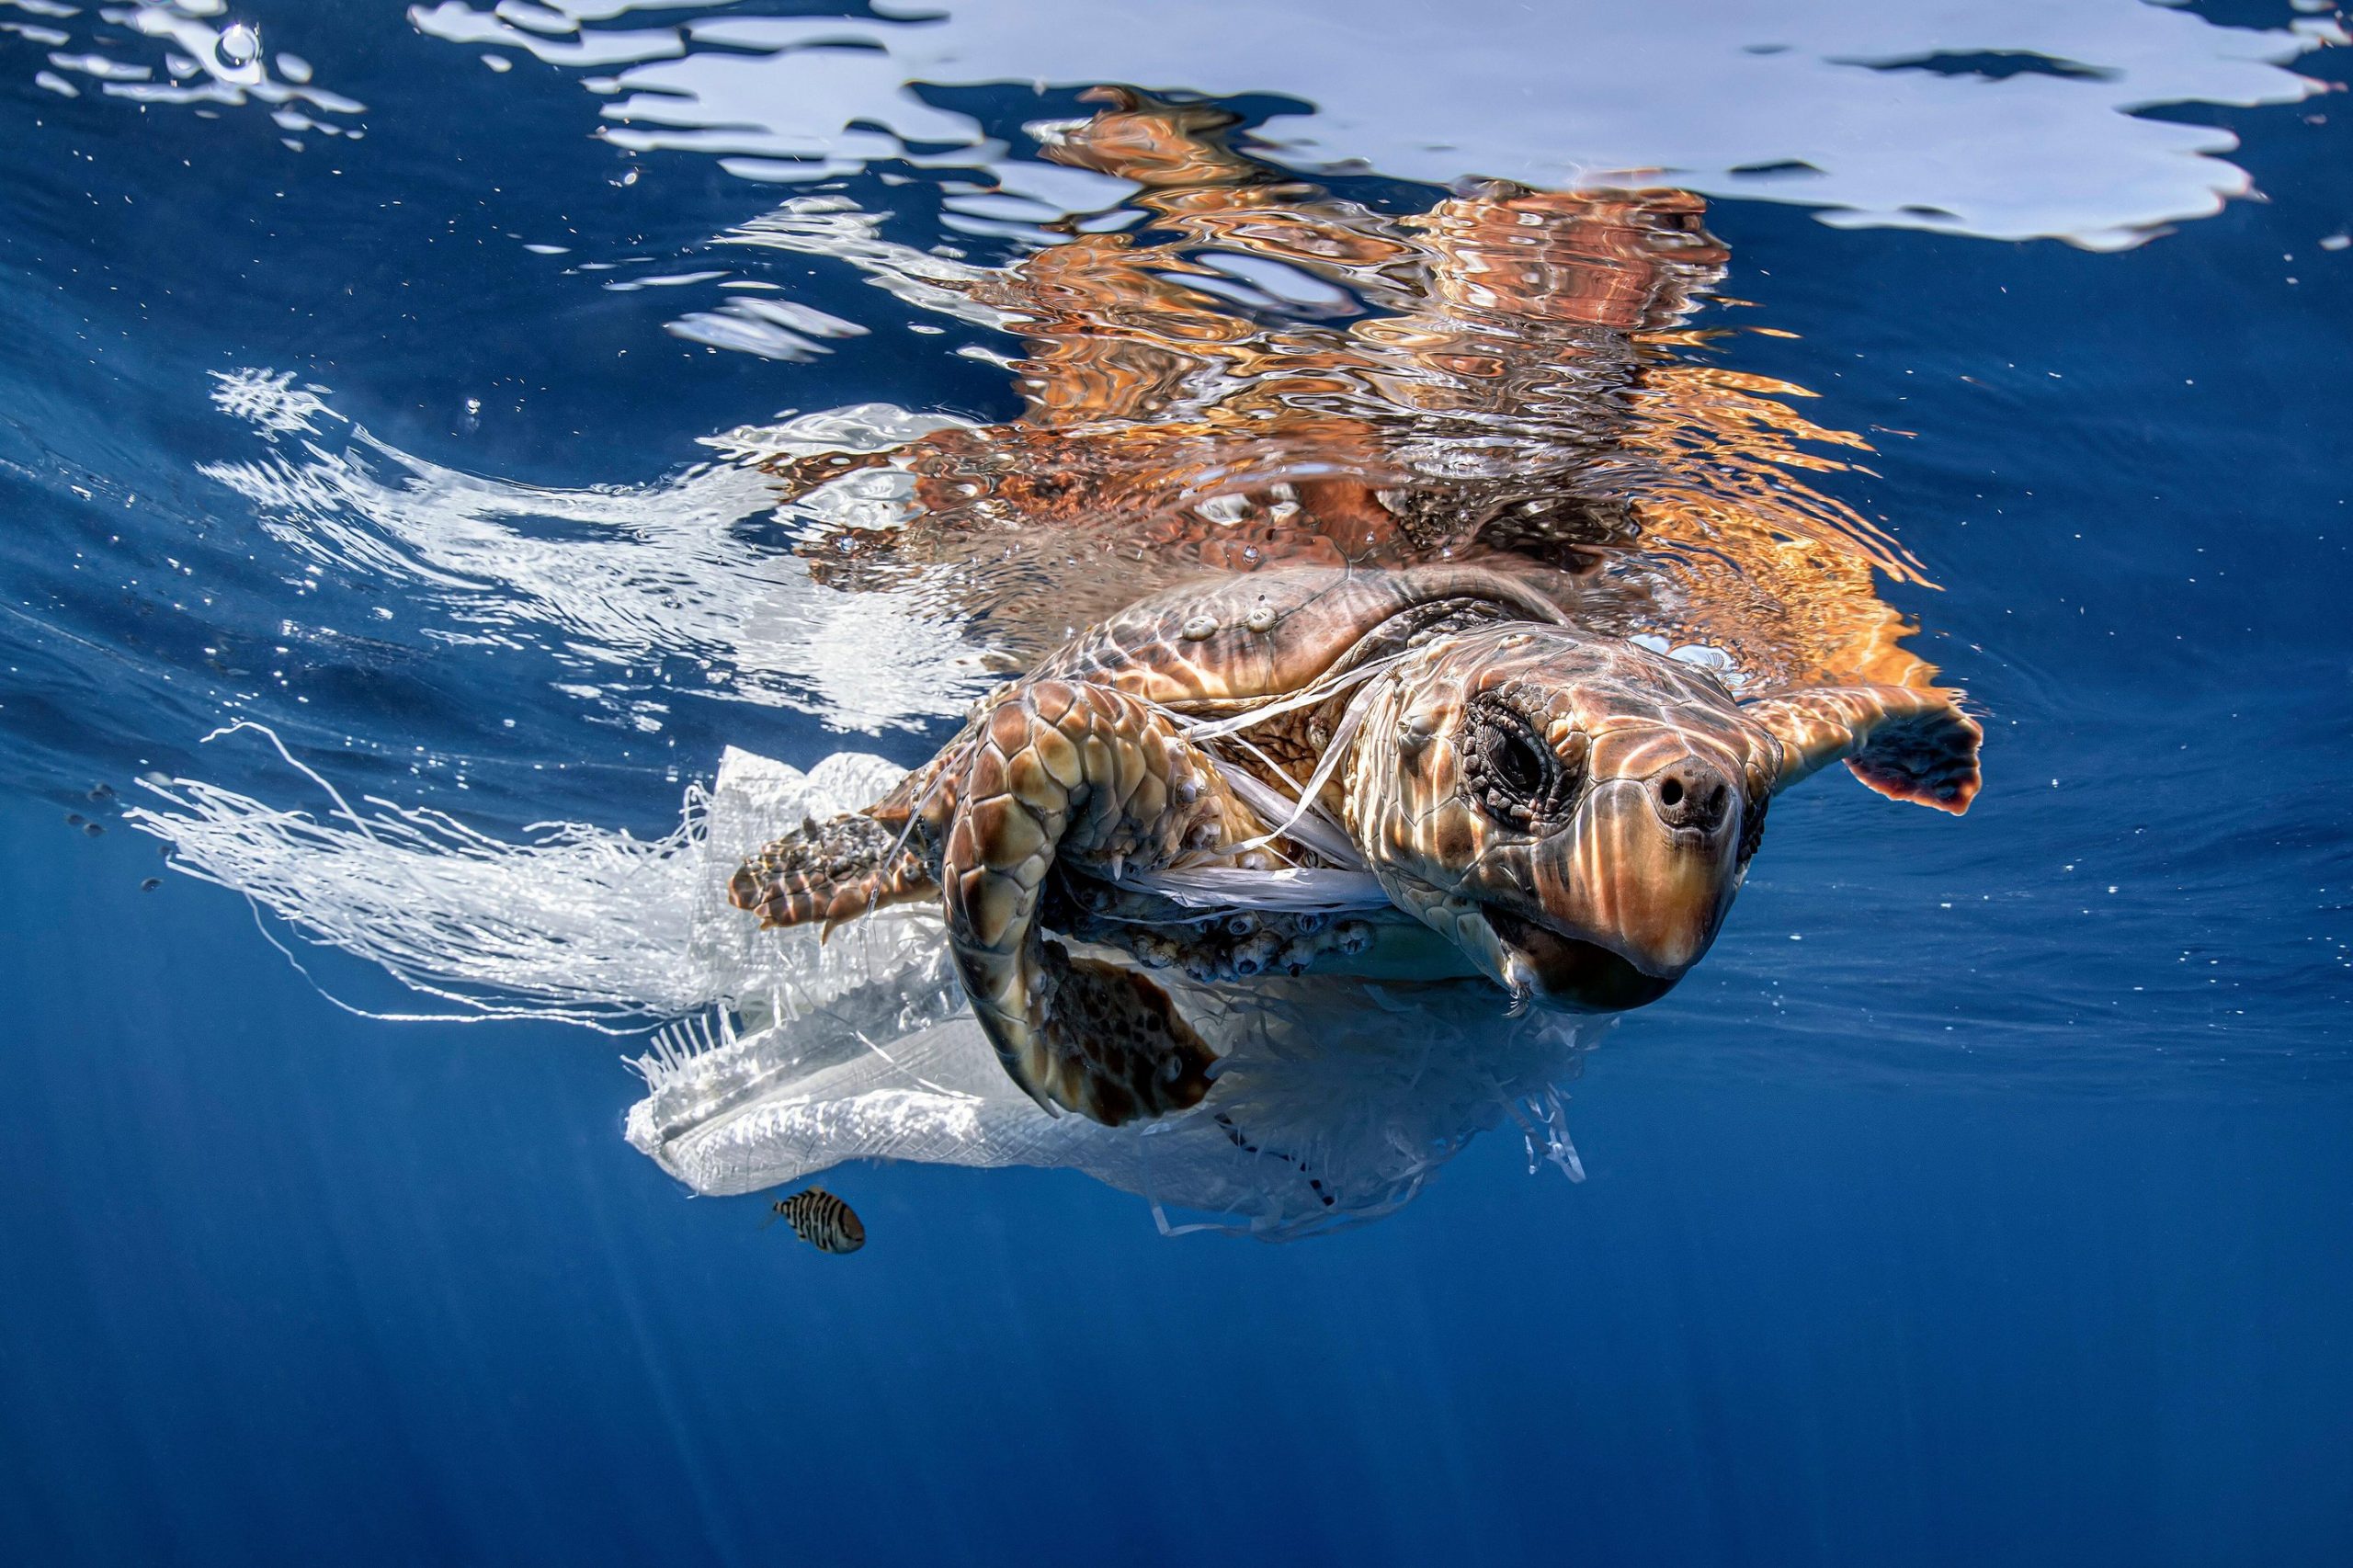 <p>西班牙，一只海龟正在试图挣脱塑料垃圾的束缚。图片来源：David Salvatori / Alamy</p>